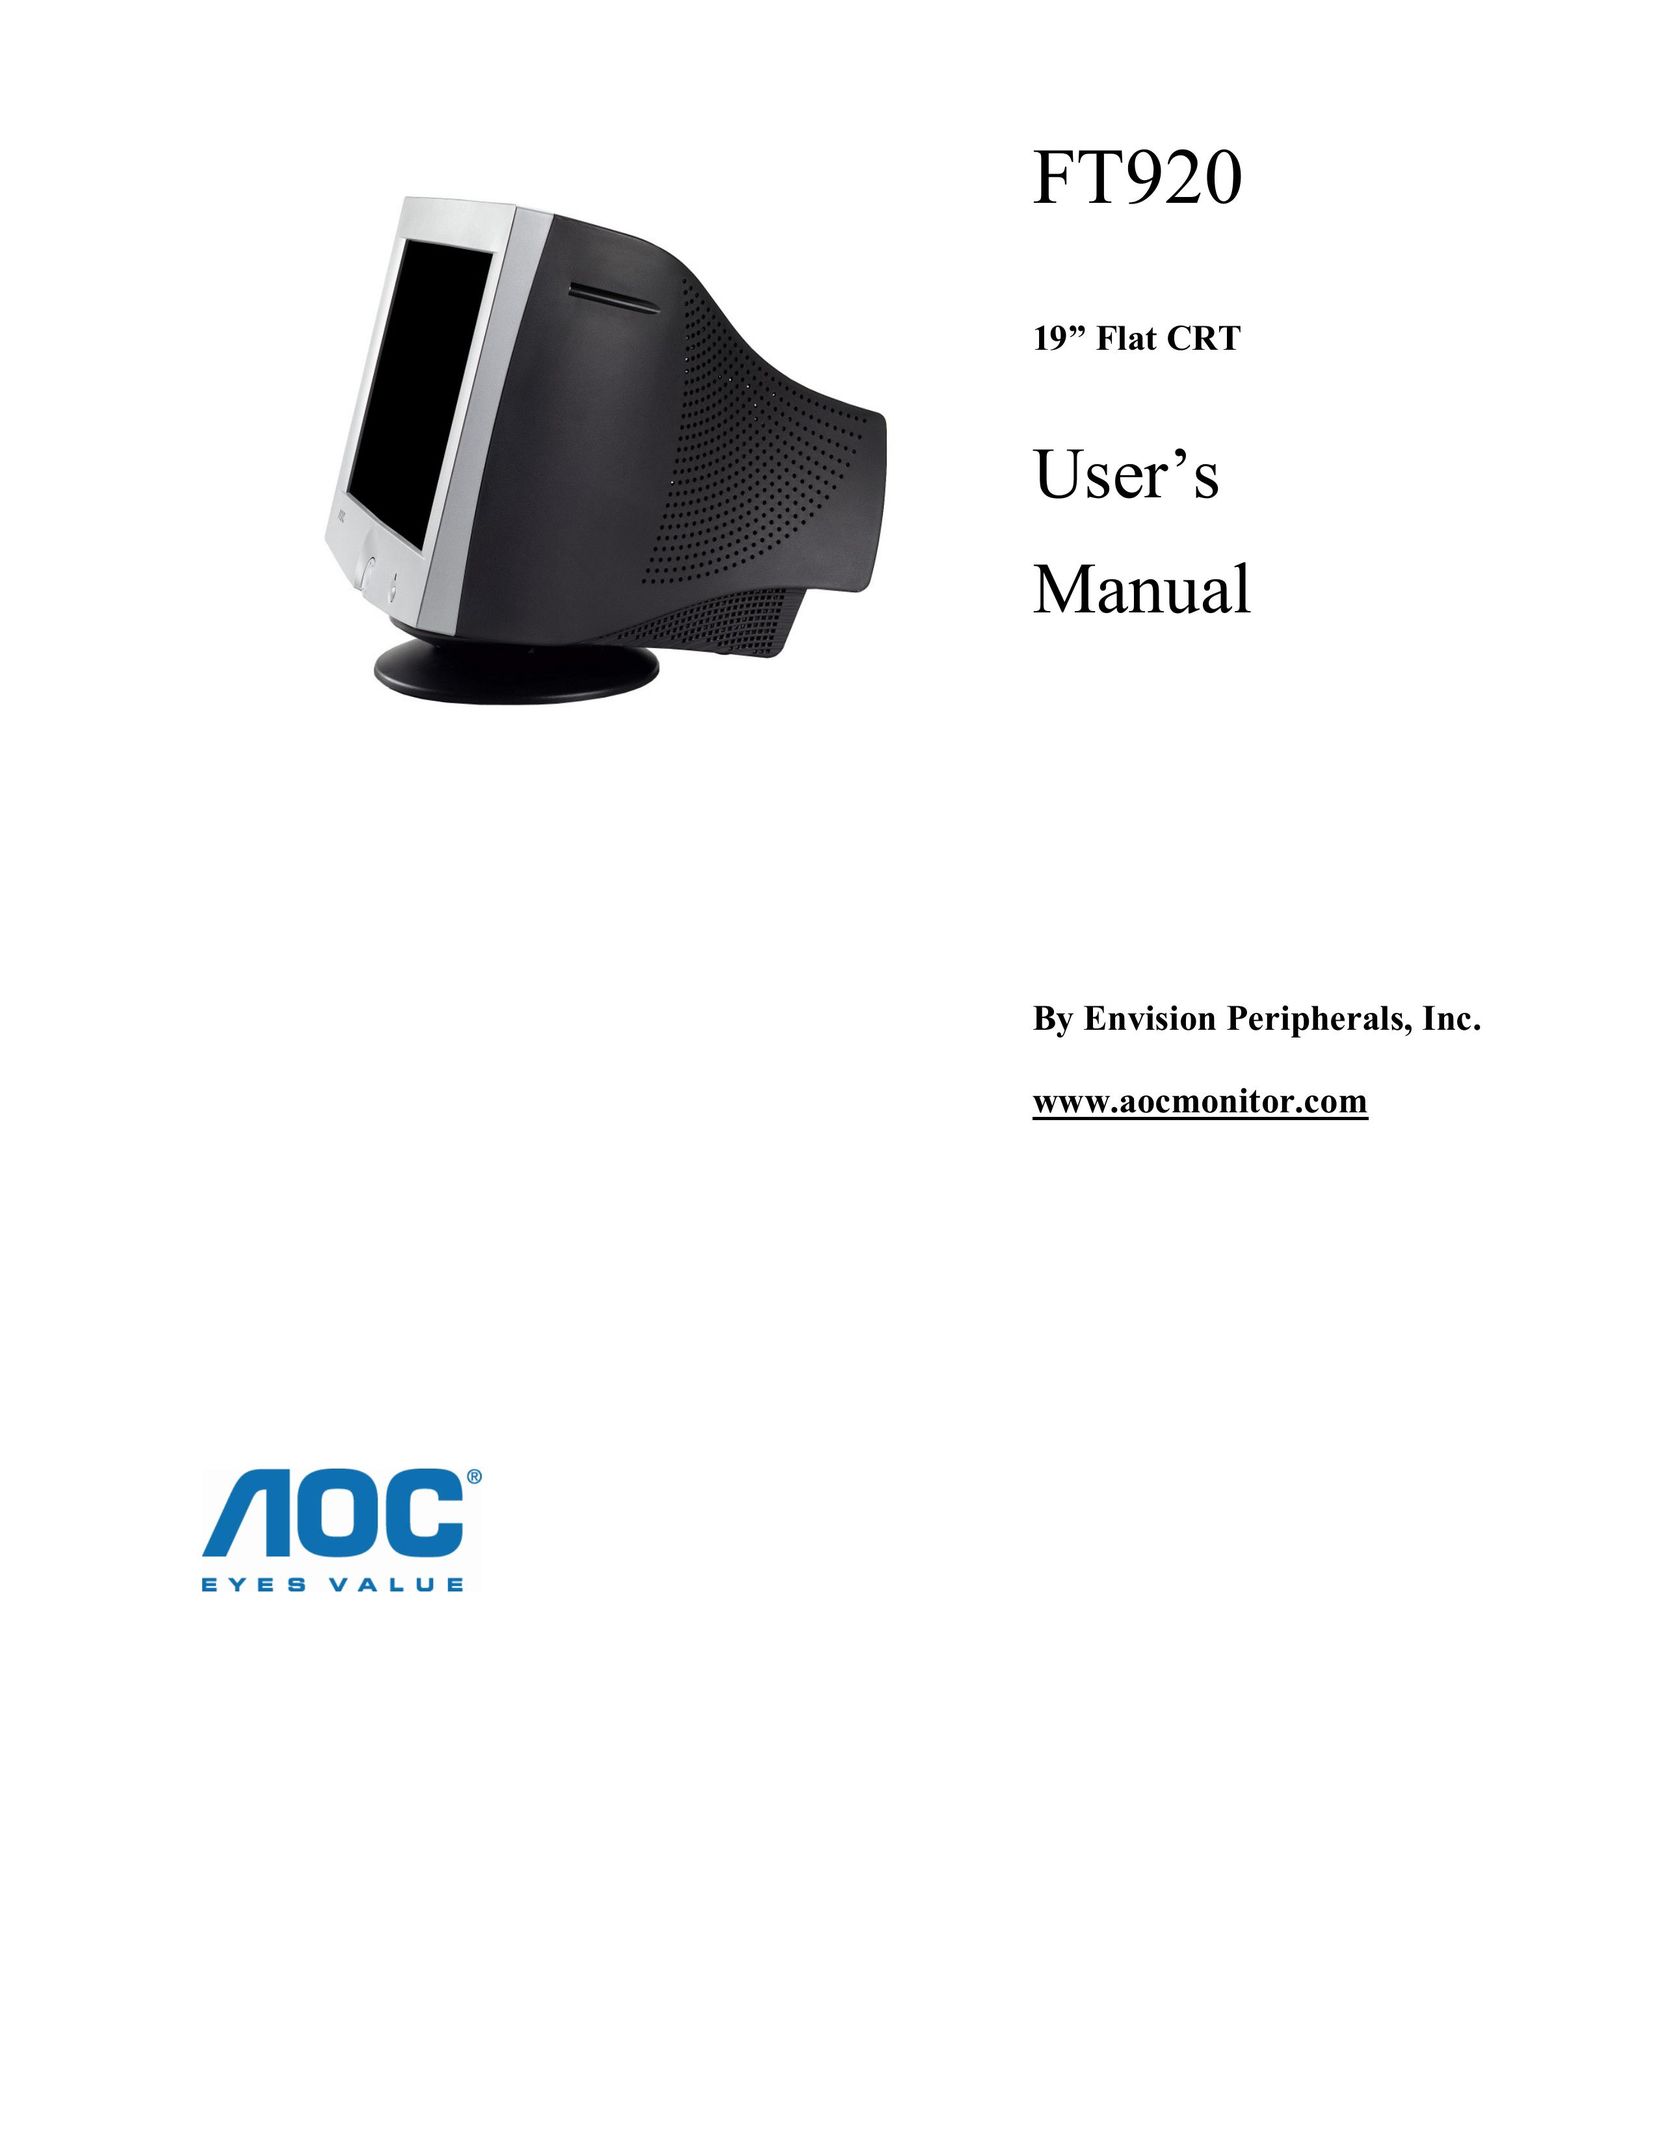 AOC FT920 CRT Television User Manual